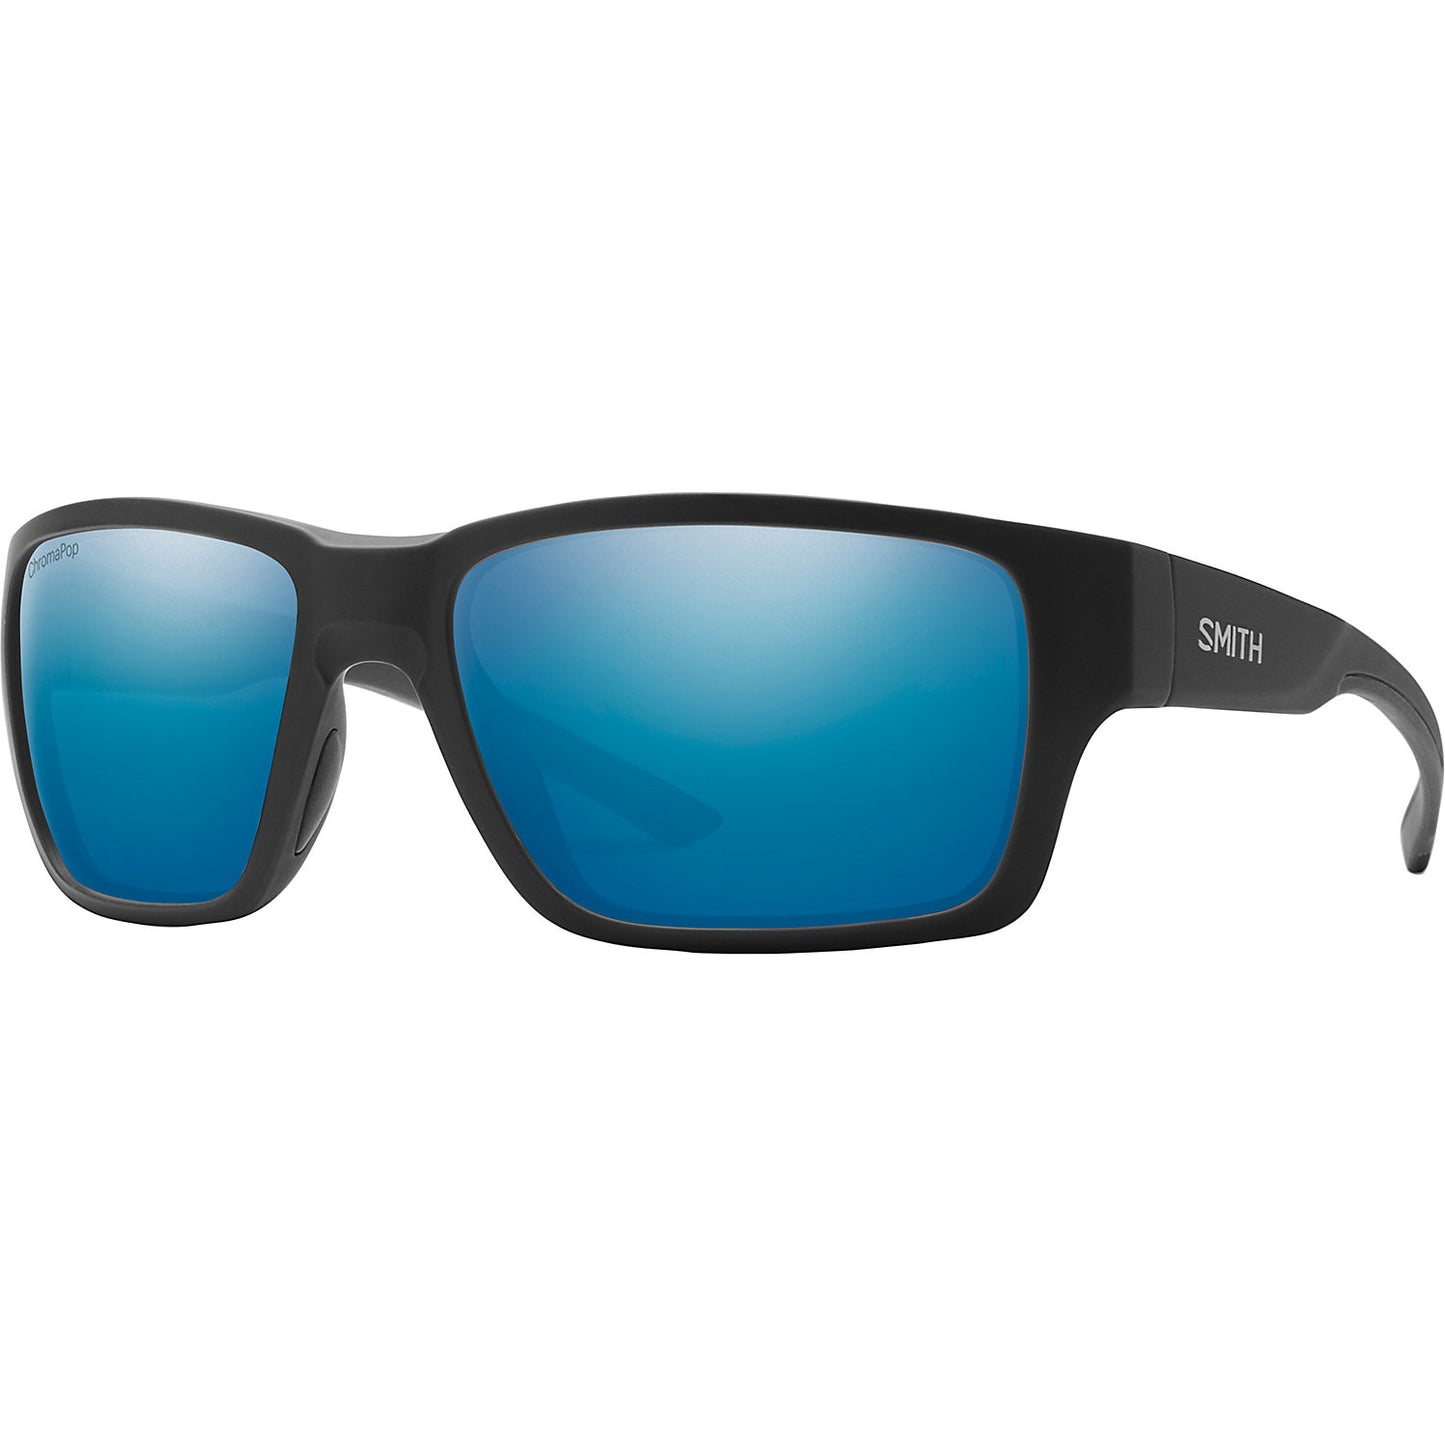 Outback Sunglasses - Matte Black/ChromaPop Polarized Blue Mirror